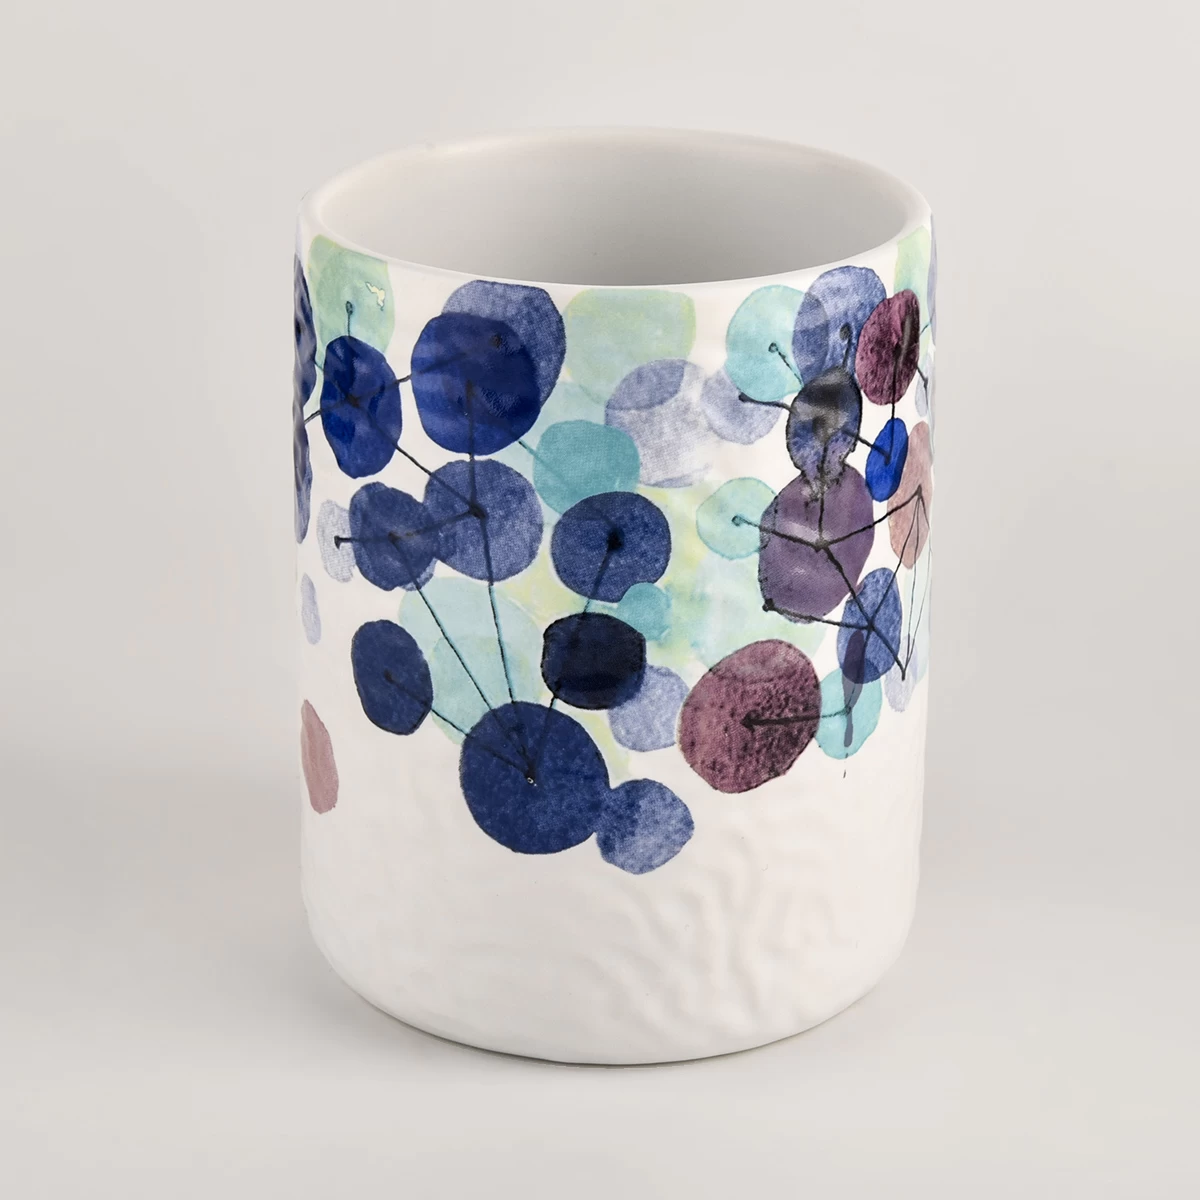 rough surface decorative ceramic vessel for home decor